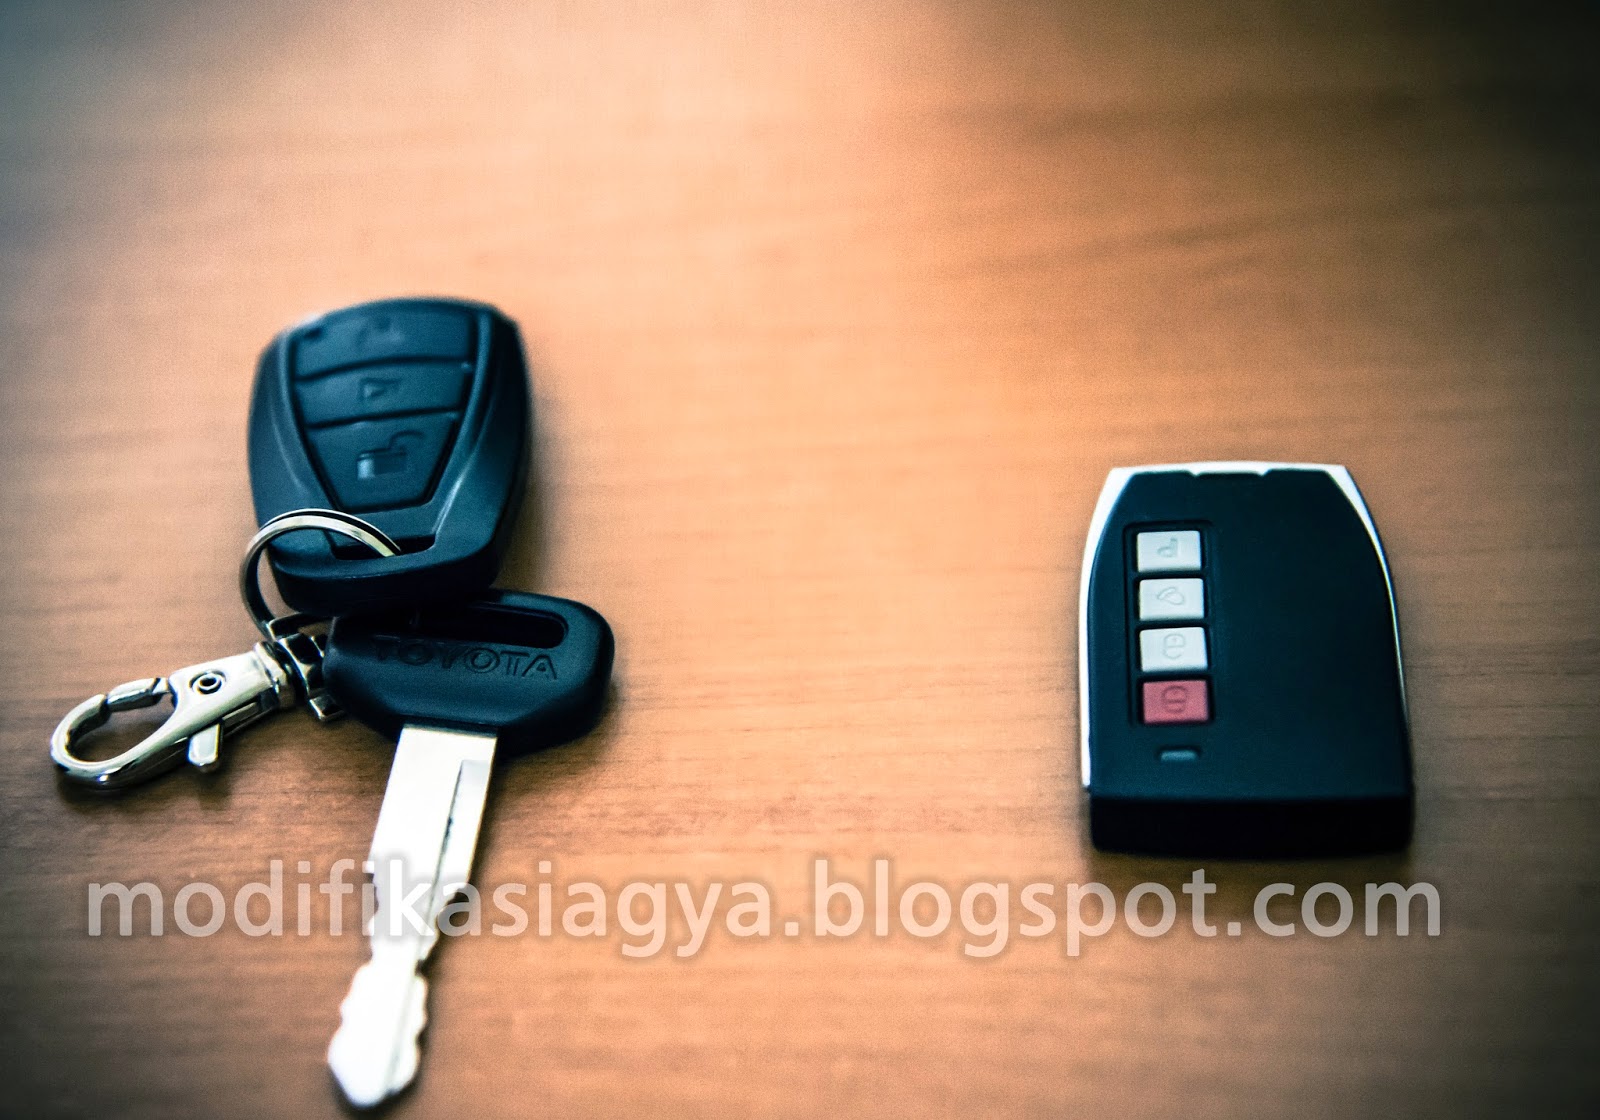 Modifikasi Toyota Agya Alarm Keyless Smart Entry Dan Start Stop